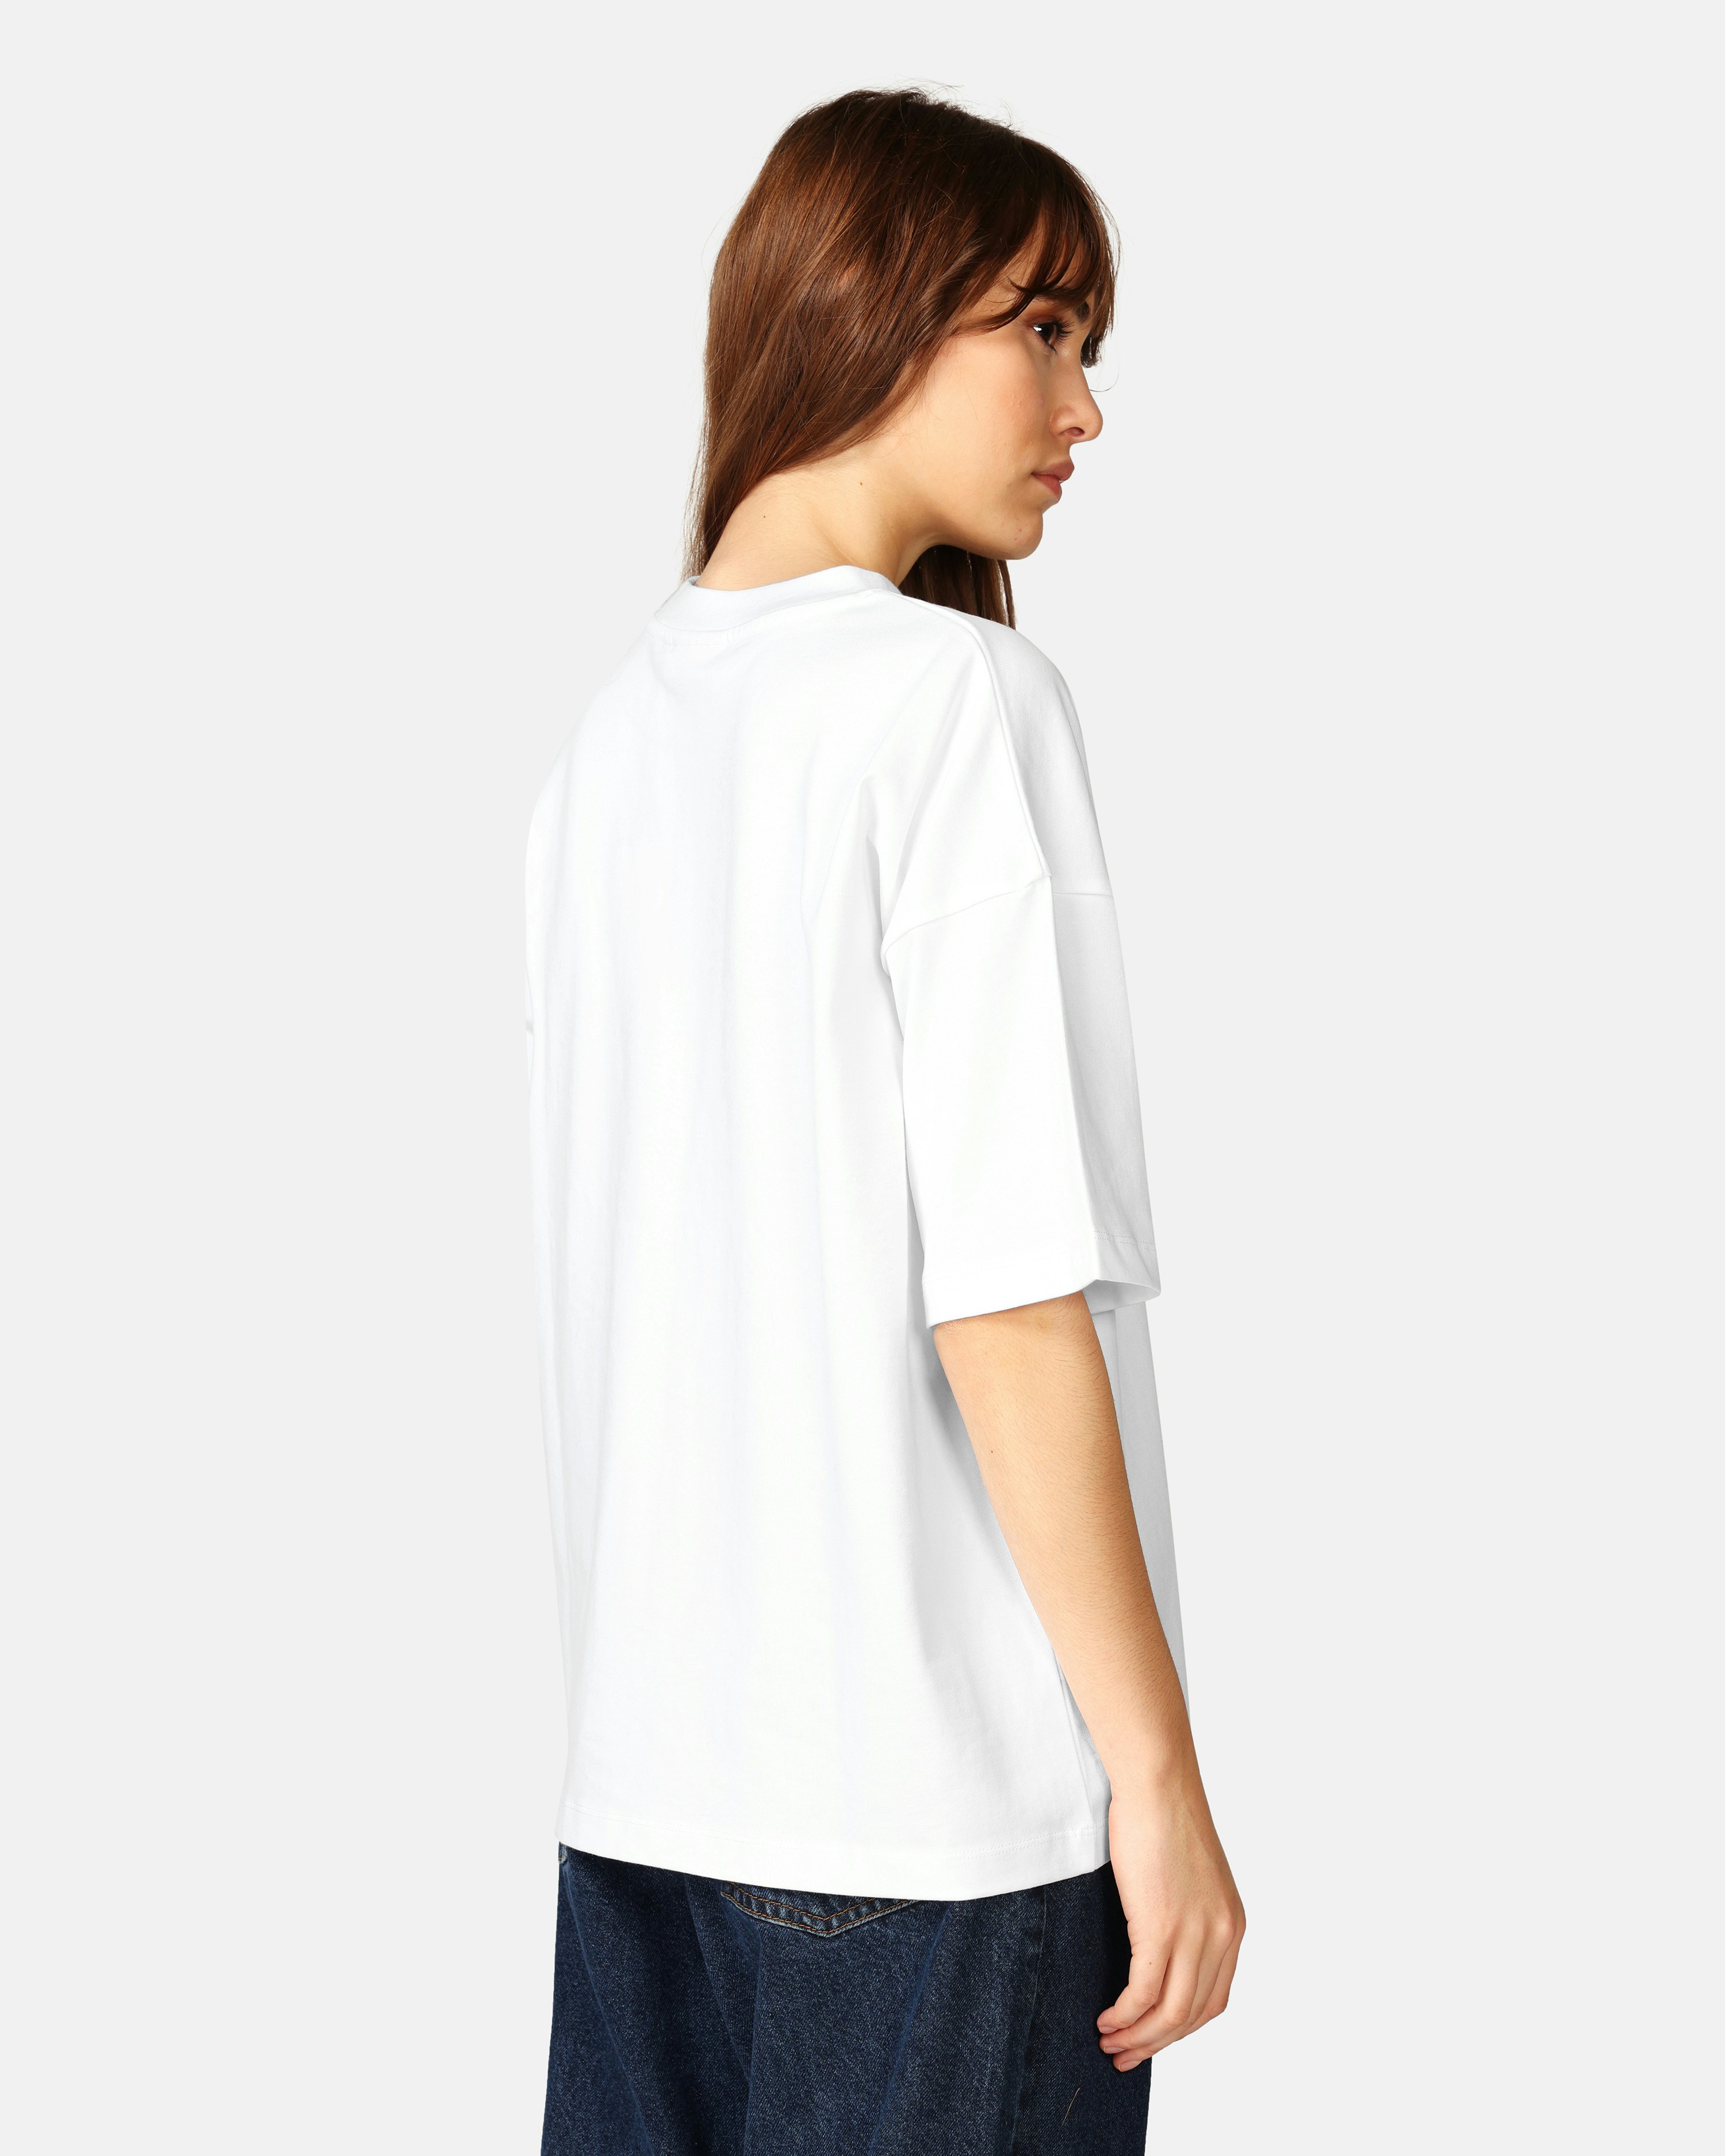 BEYOND MEDALS Culture T-Shirt White | Unisex | Junkyard | T-Shirts